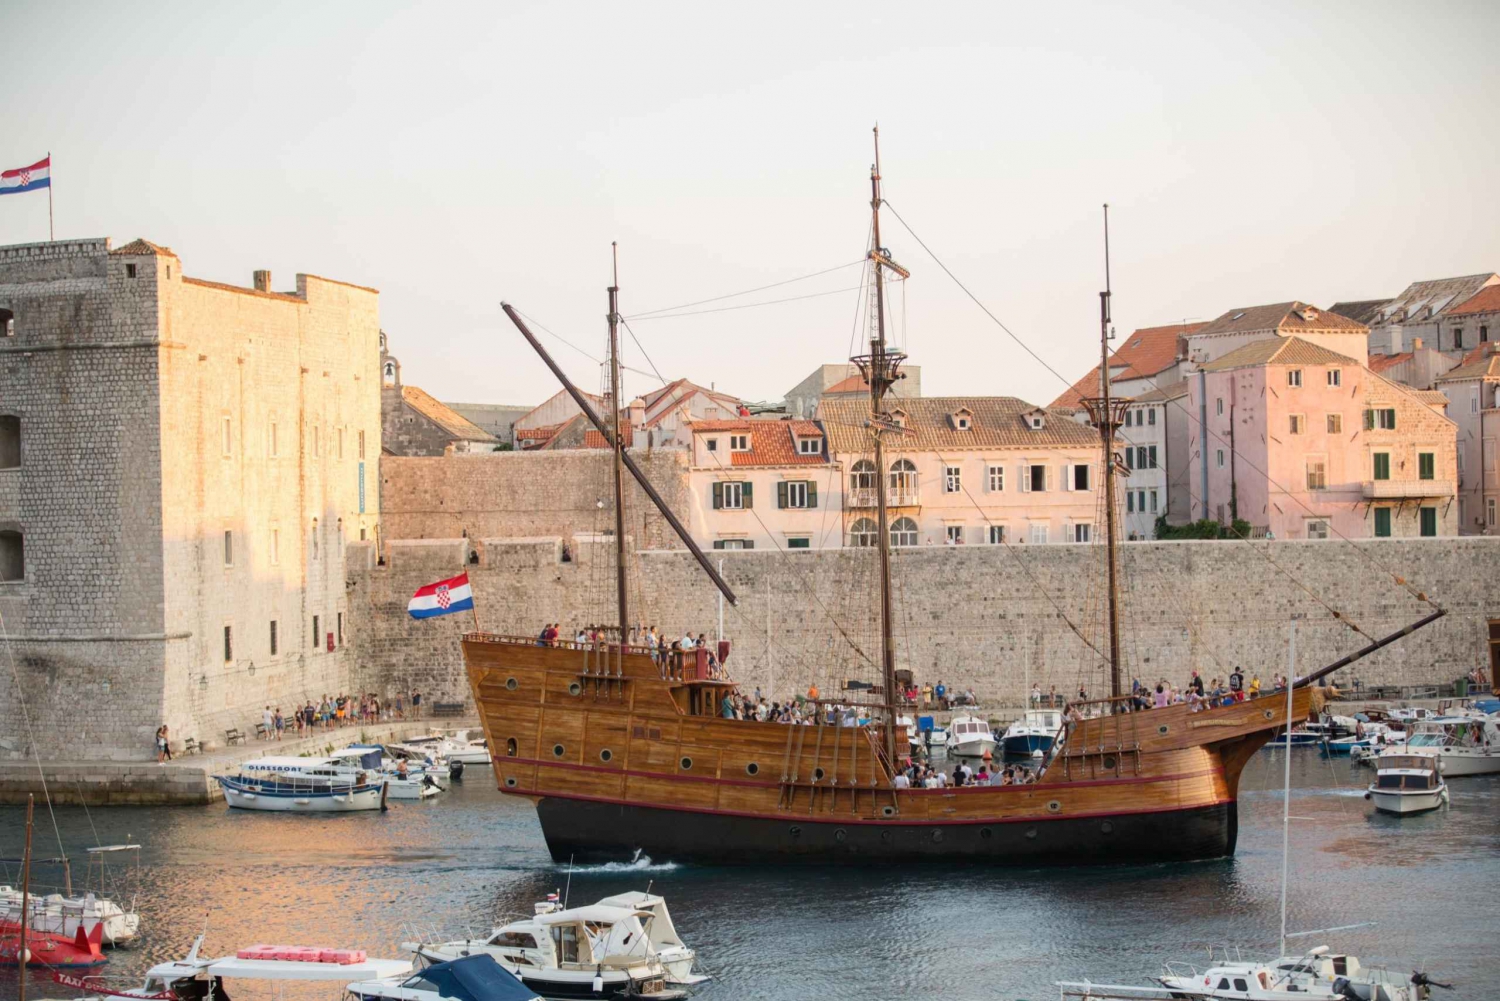 Dubrovnik: Sunset Cruise by Karaka with Champagne